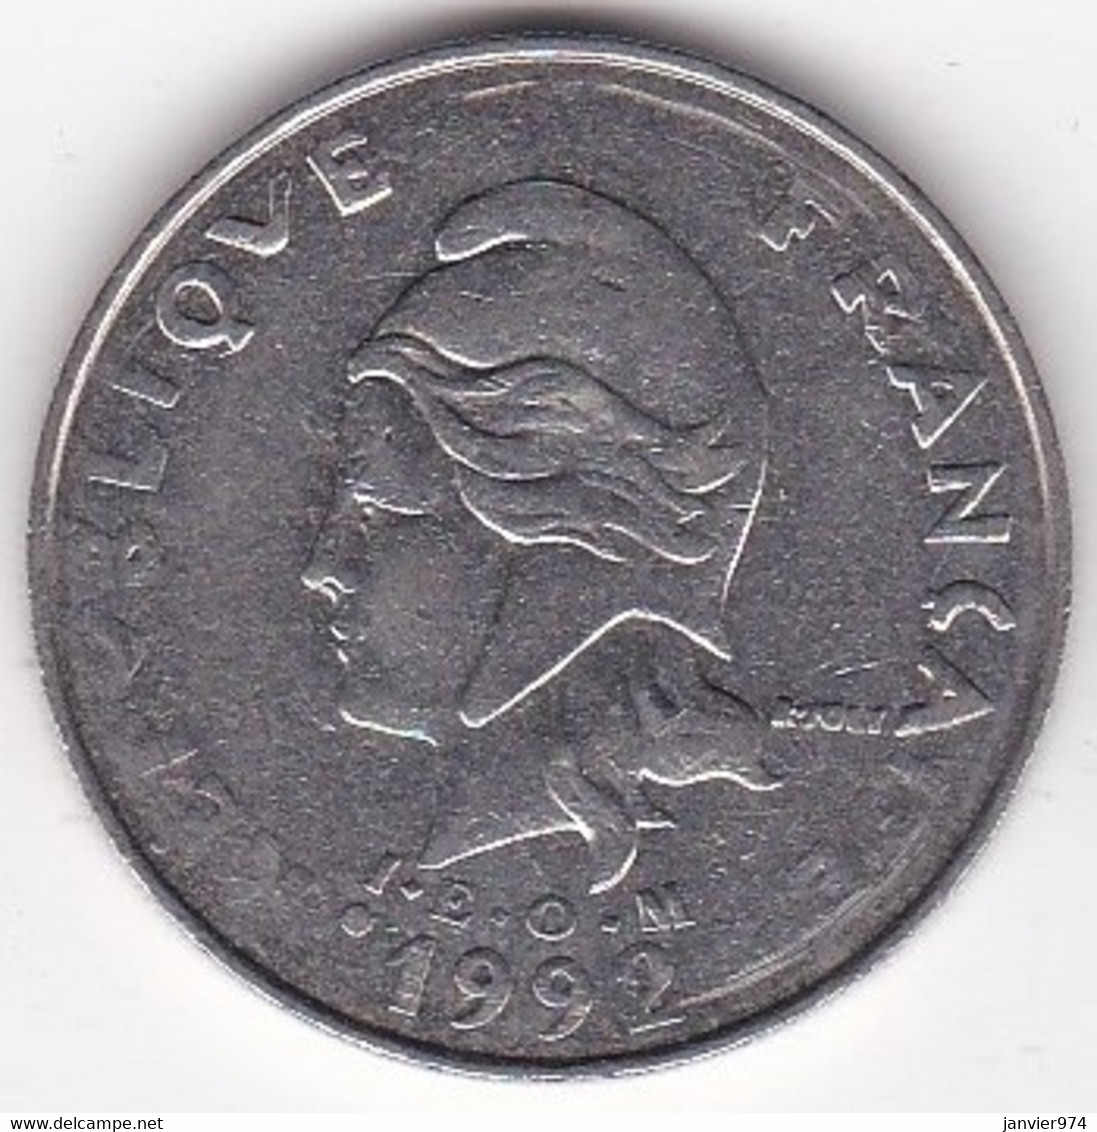 Polynésie Française. 20 Francs 1992  En Nickel - French Polynesia